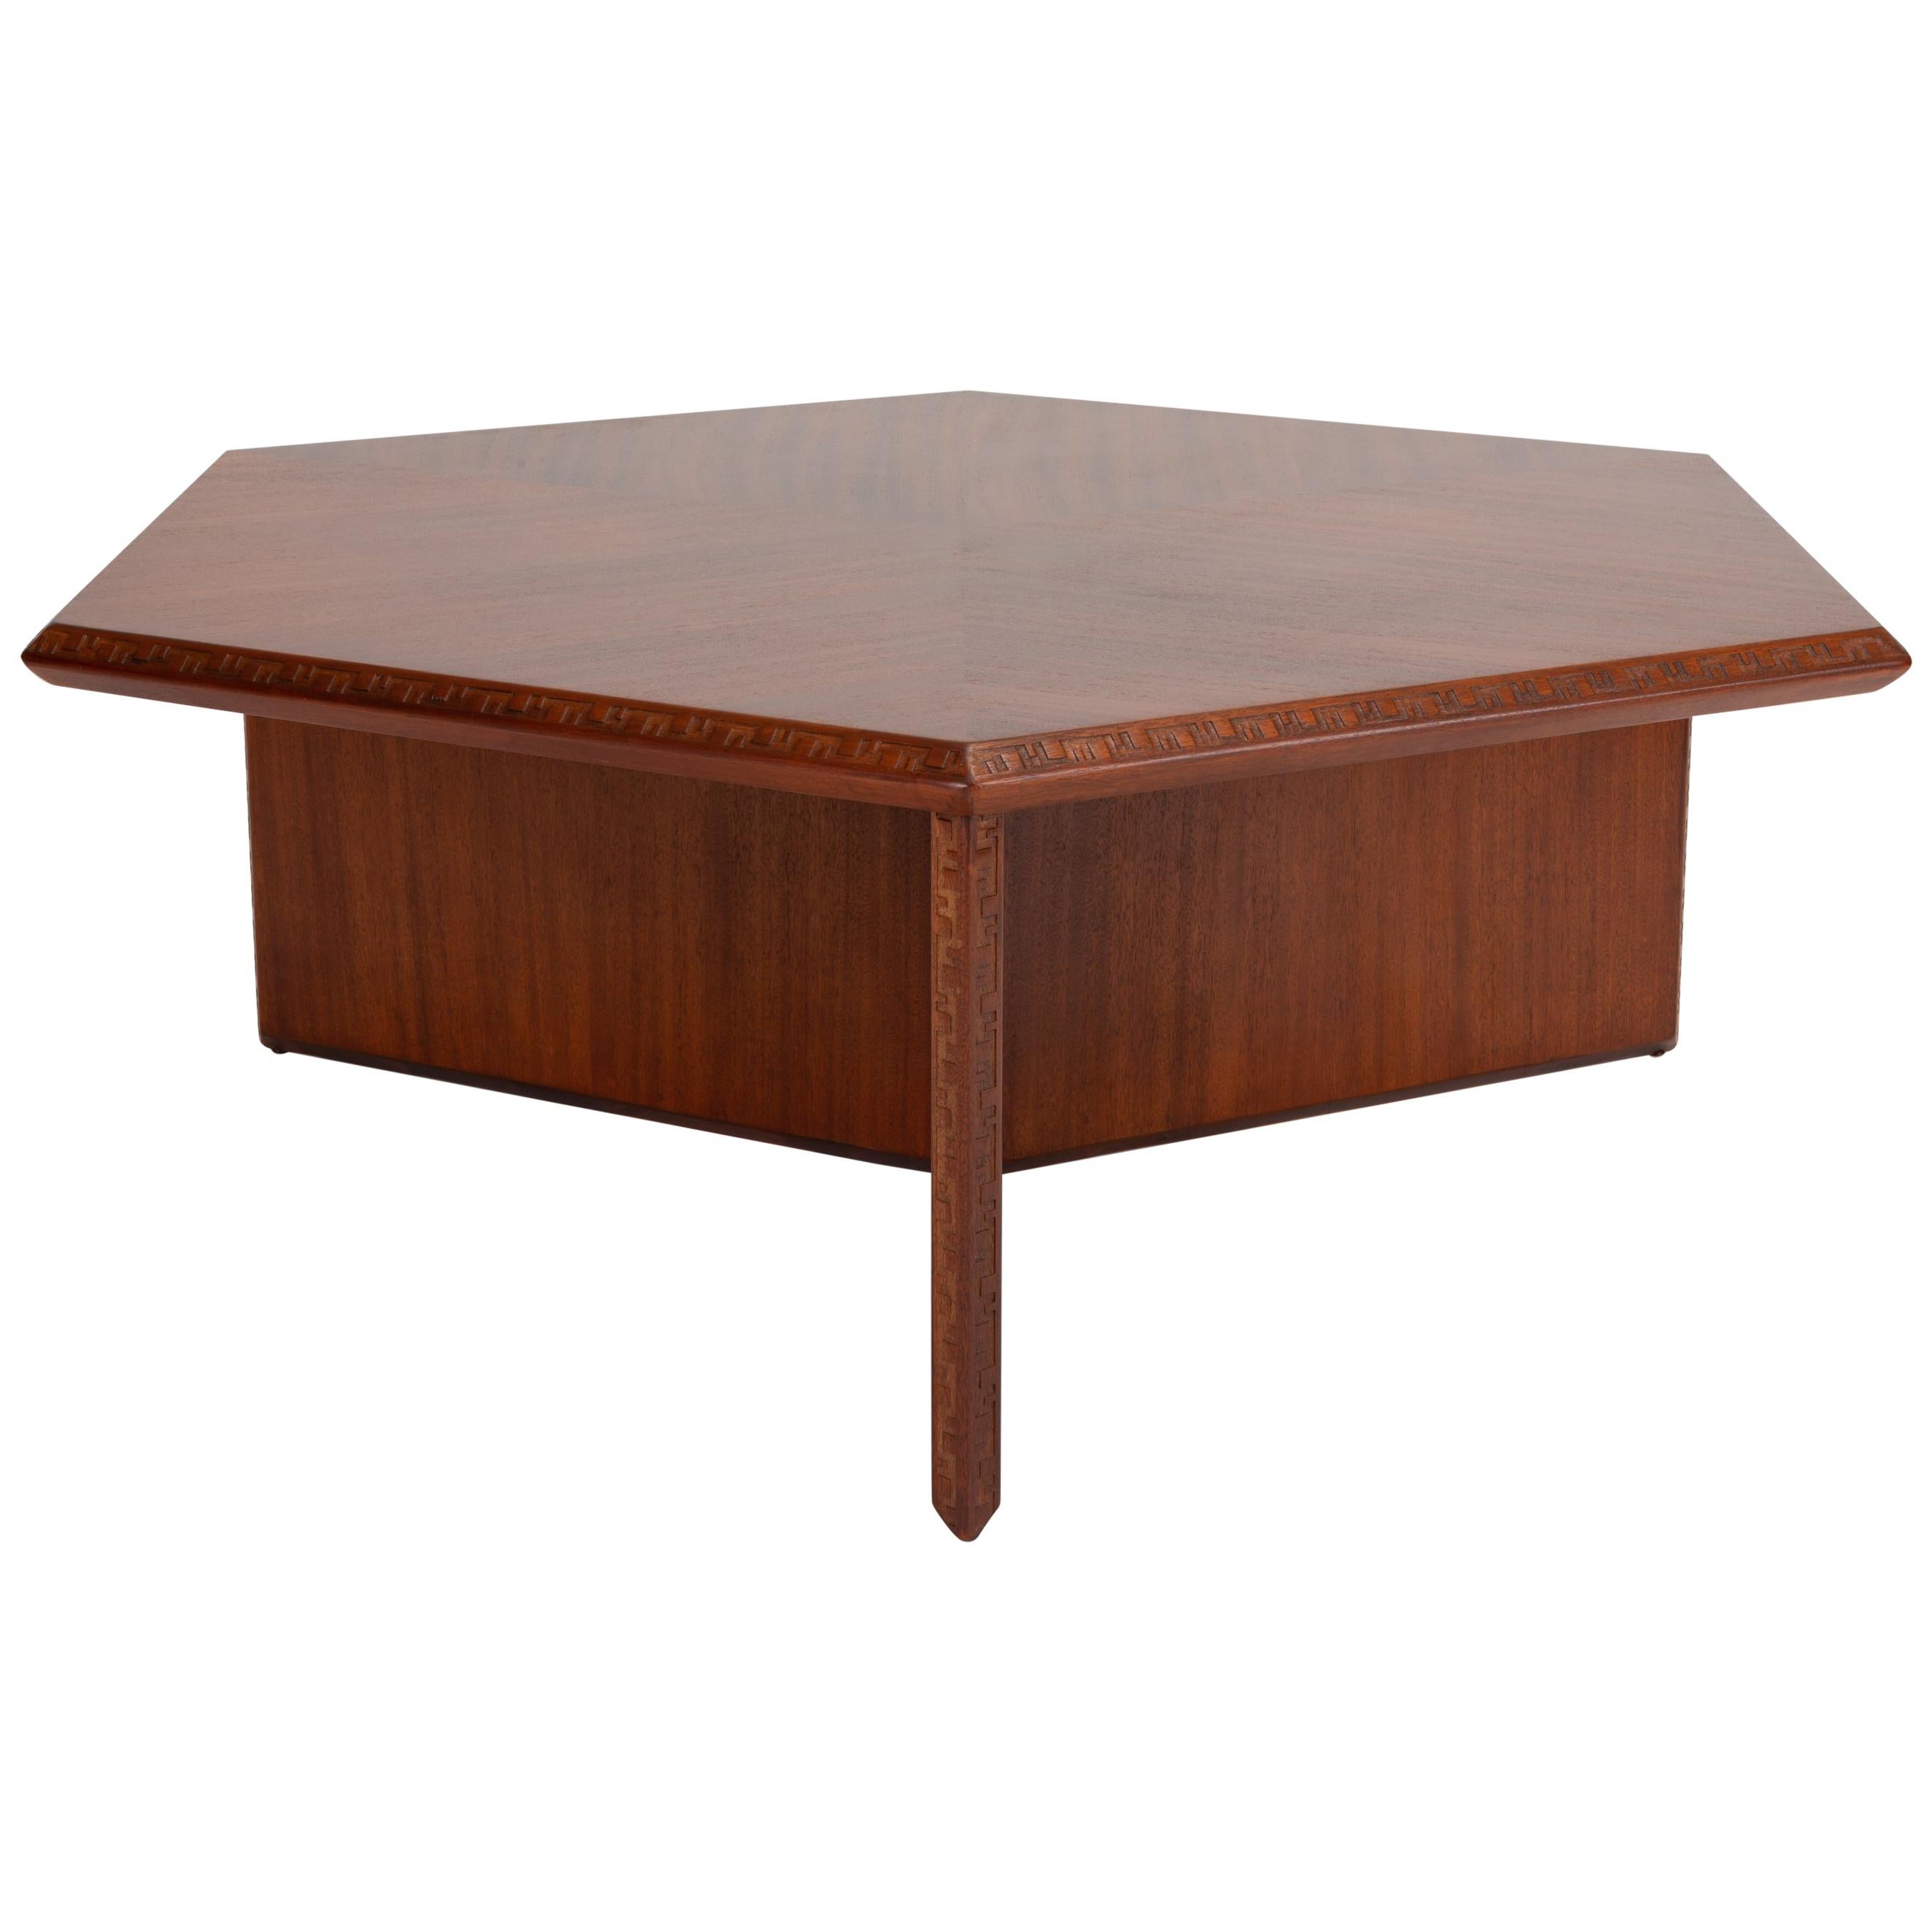 Frank Lloyd Wright “Taliesin” Coffee Table for Heritage-Henredon